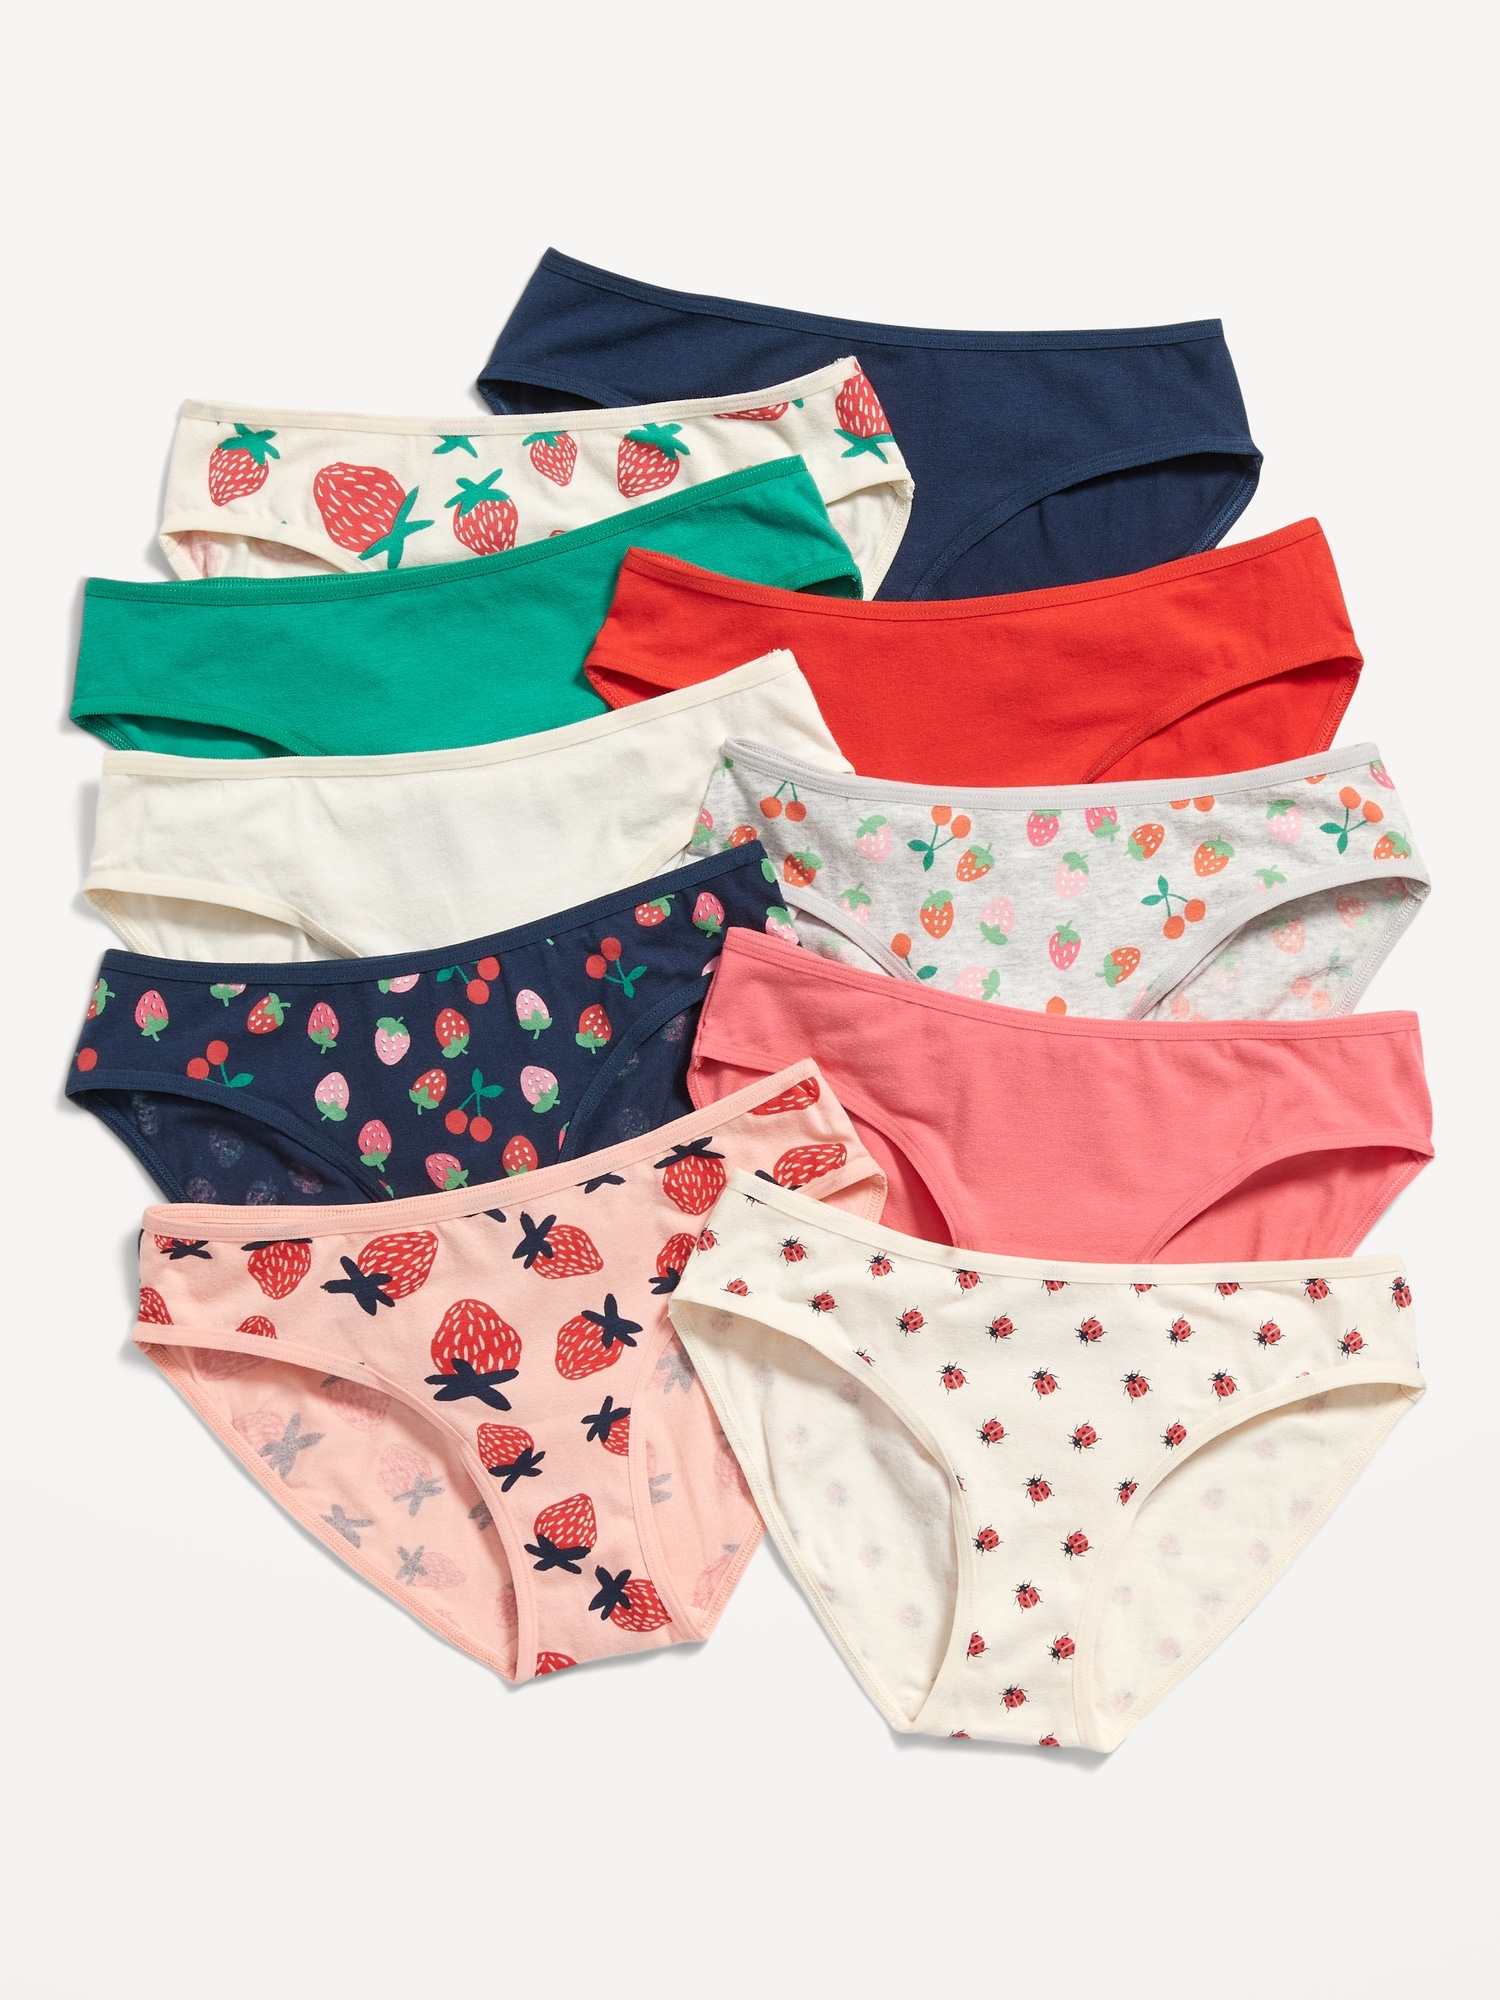 Girls Cotton Blend Assorted Printed Underwear Size 10 - at